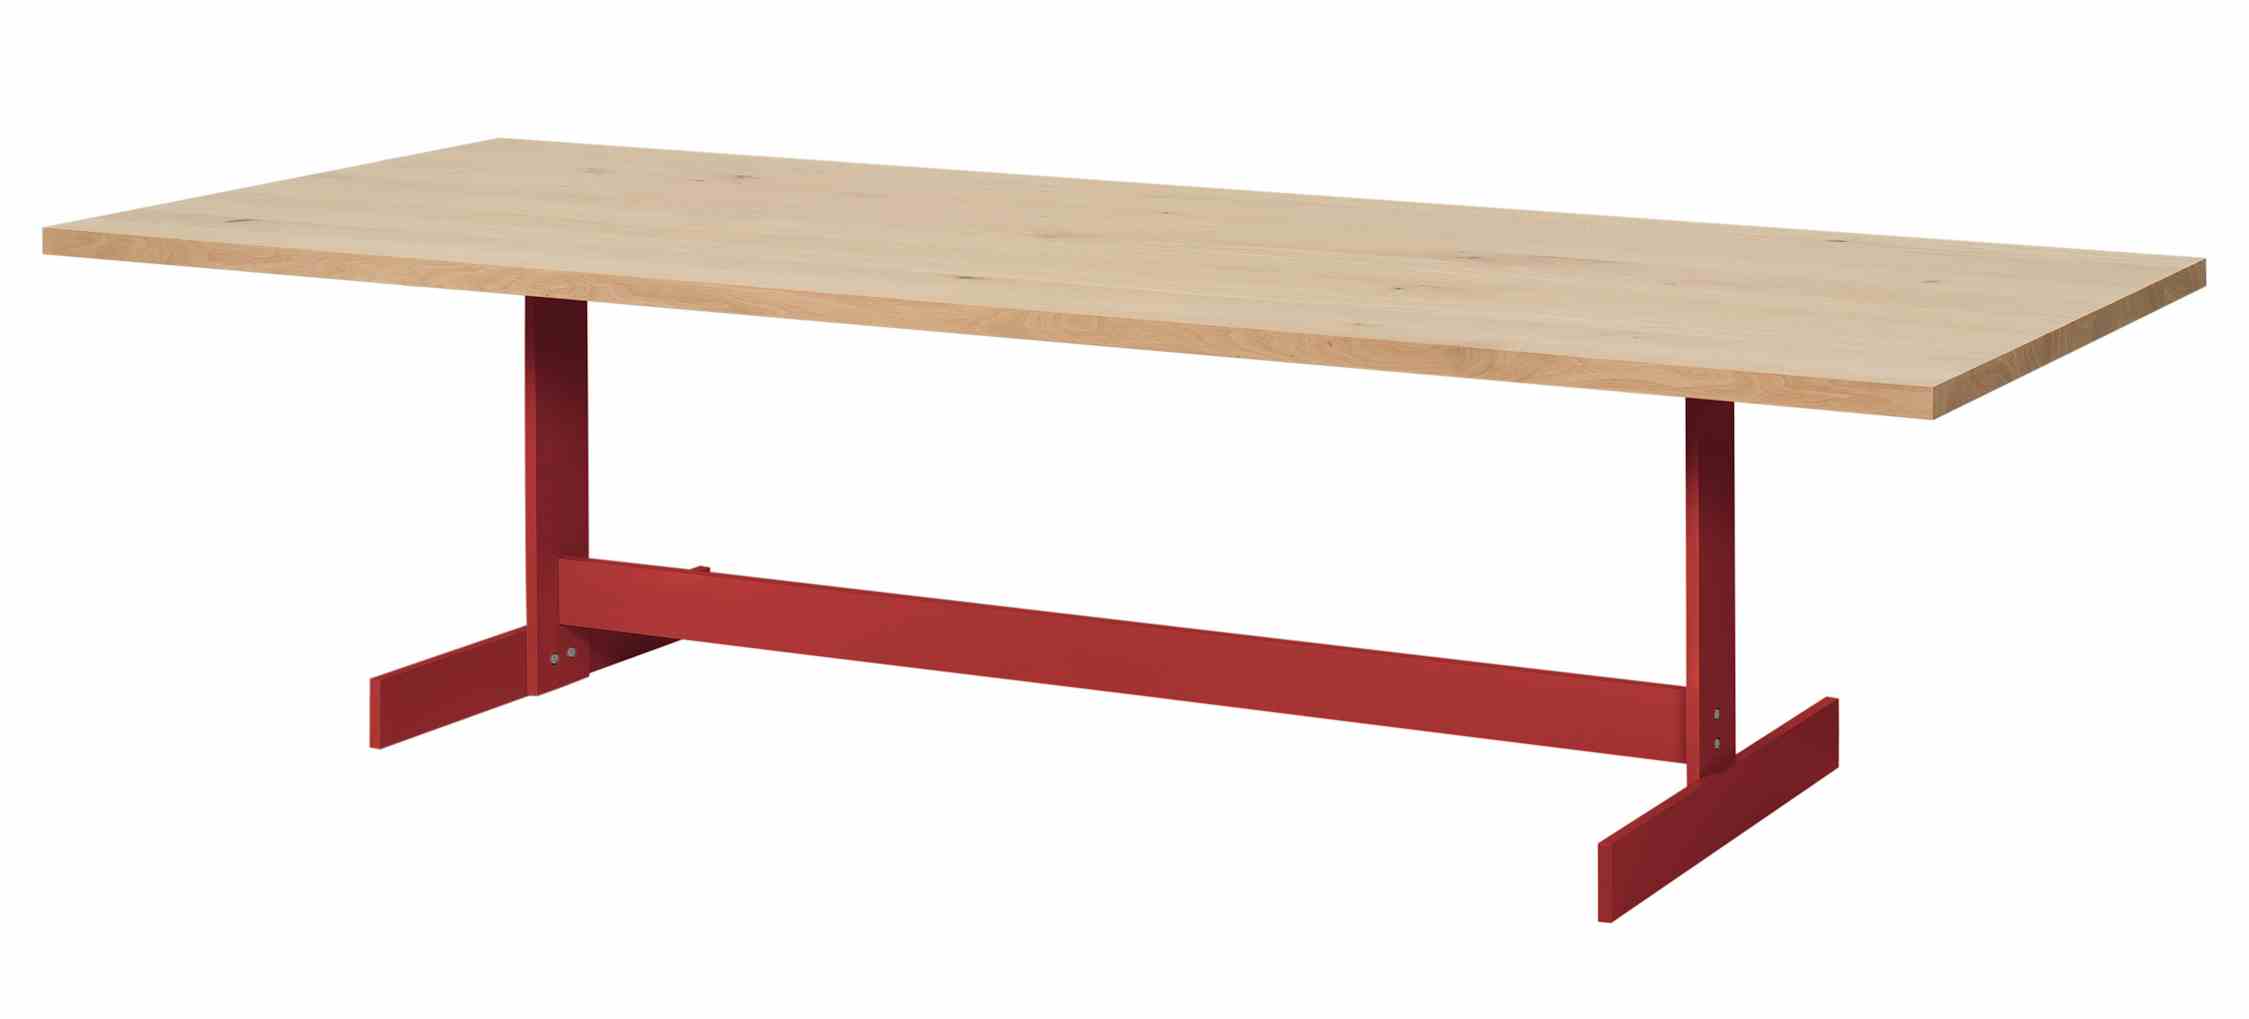 E15-furniture-kazimir-table-red-angle-haute-living_190507_171237